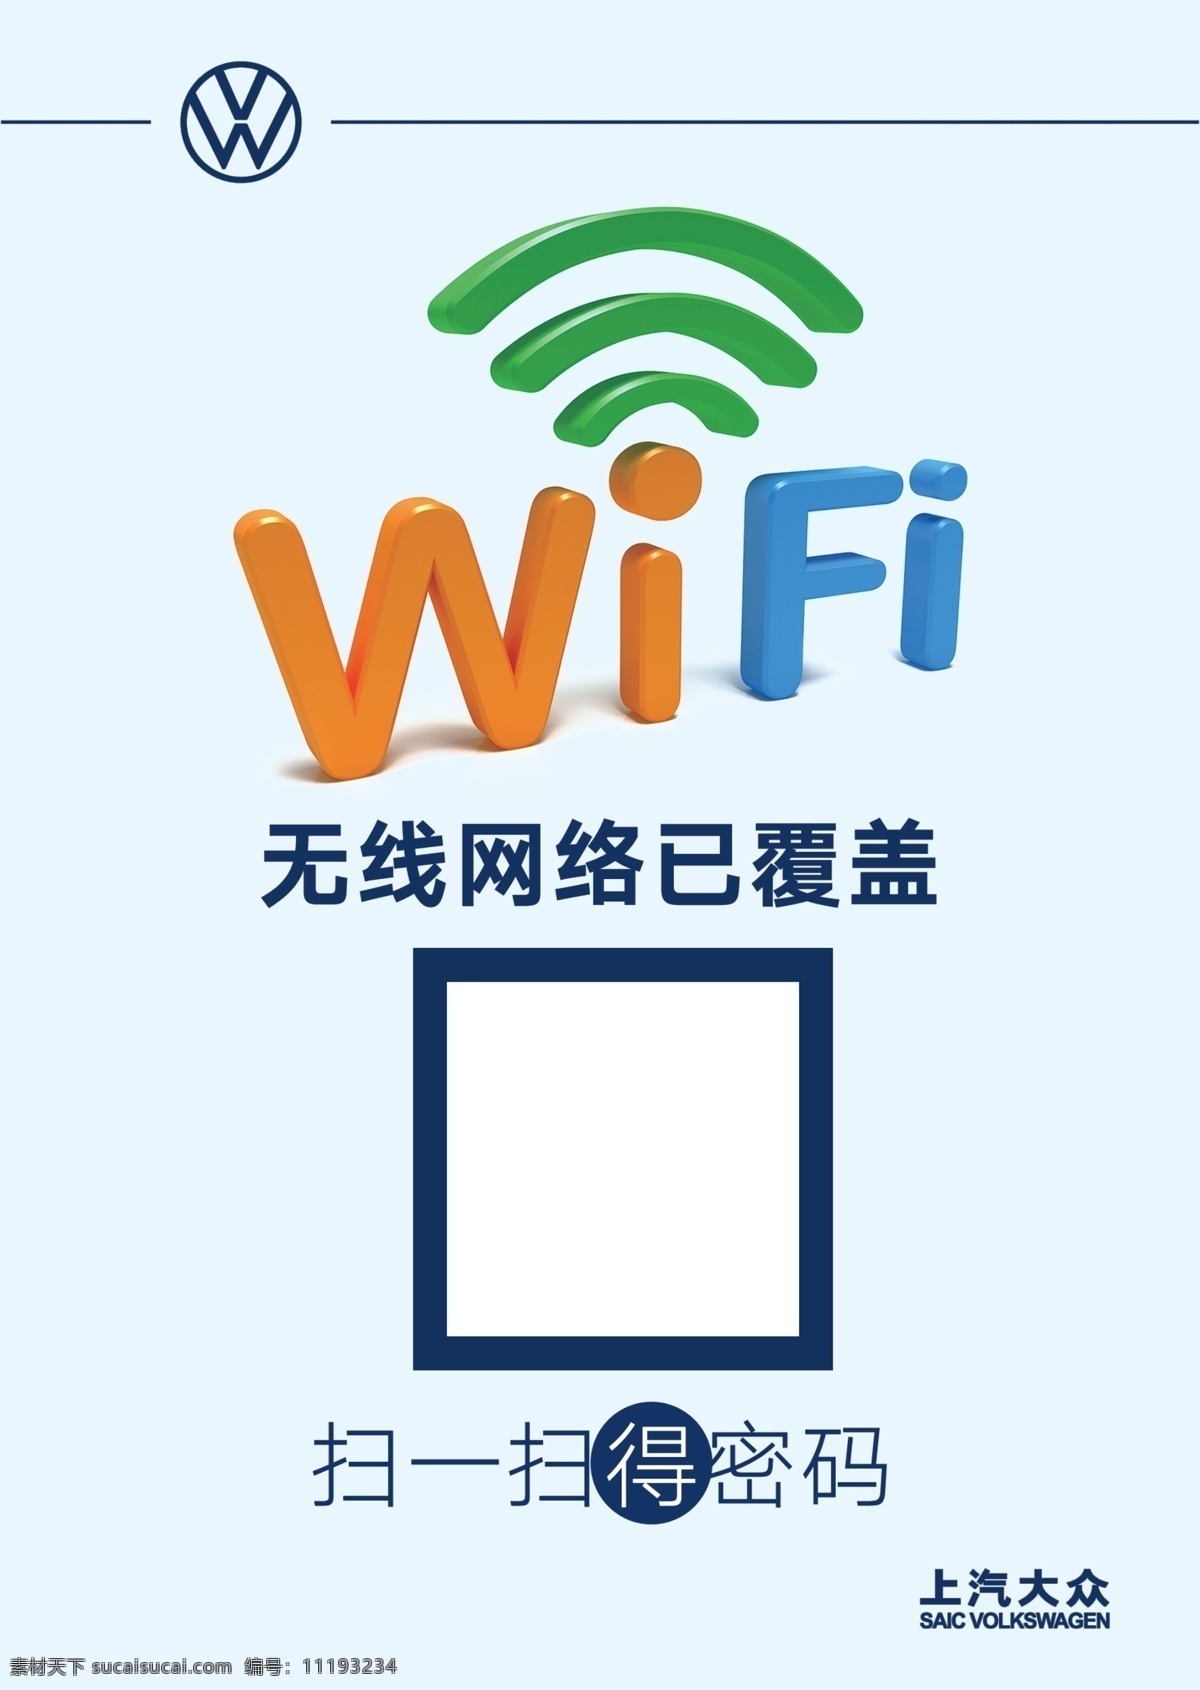 wifi台卡 wifi海报 无线网络 wifi桌牌 wifi 上汽大众